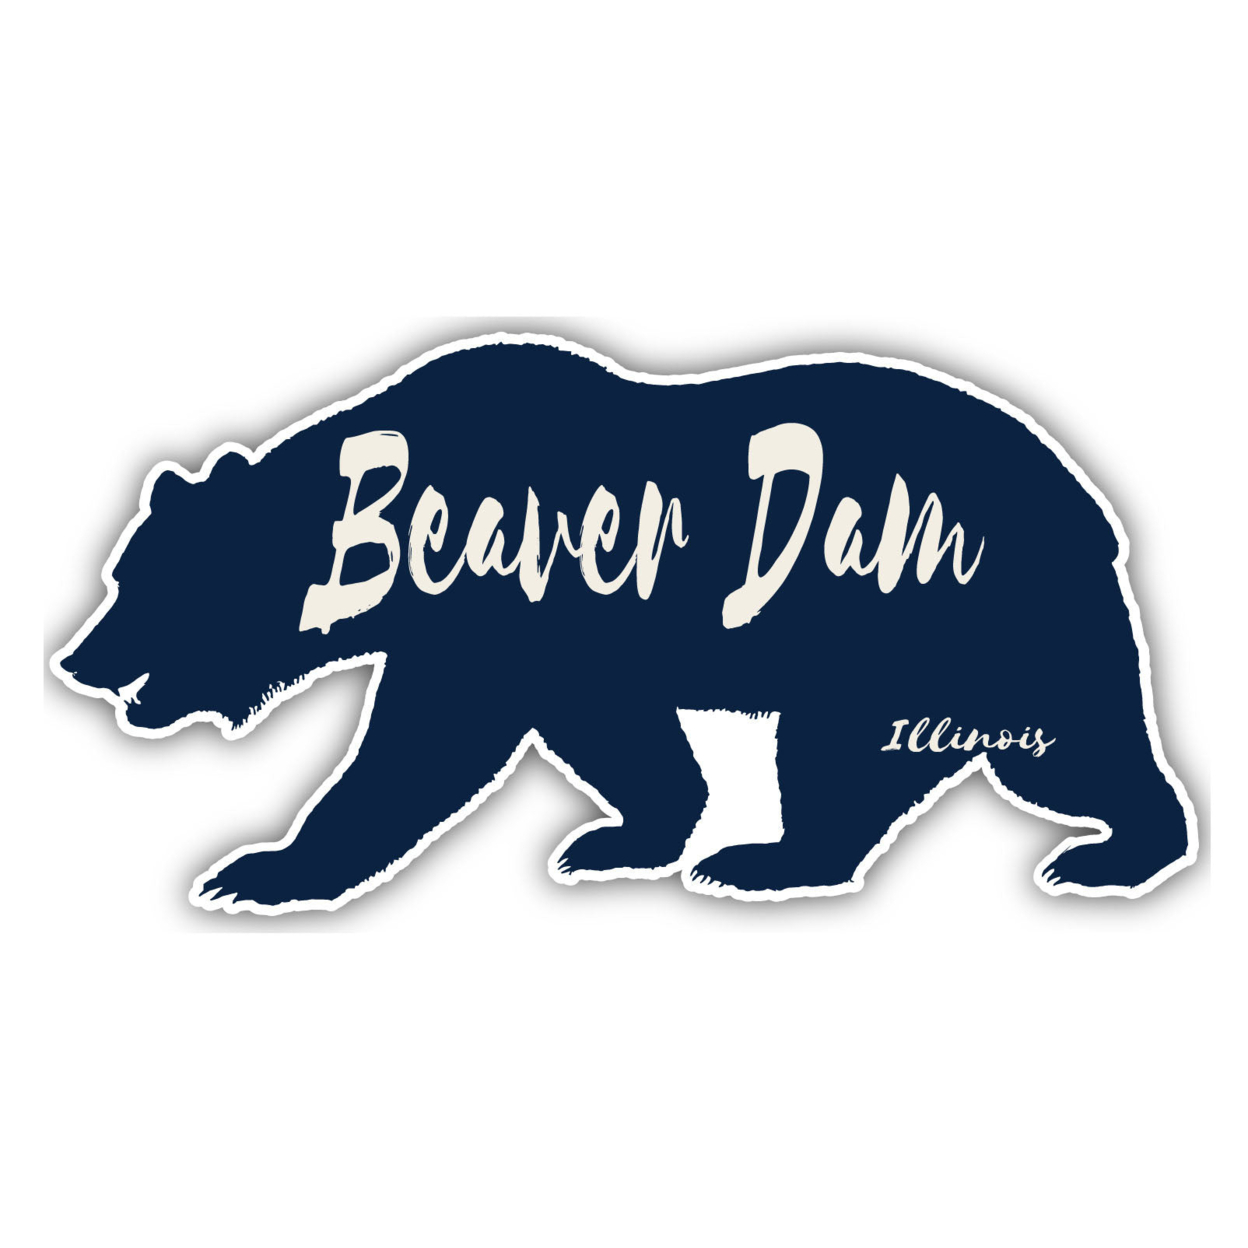 Beaver Dam Illinois Souvenir Decorative Stickers (Choose Theme And Size) - 4-Pack, 6-Inch, Bear